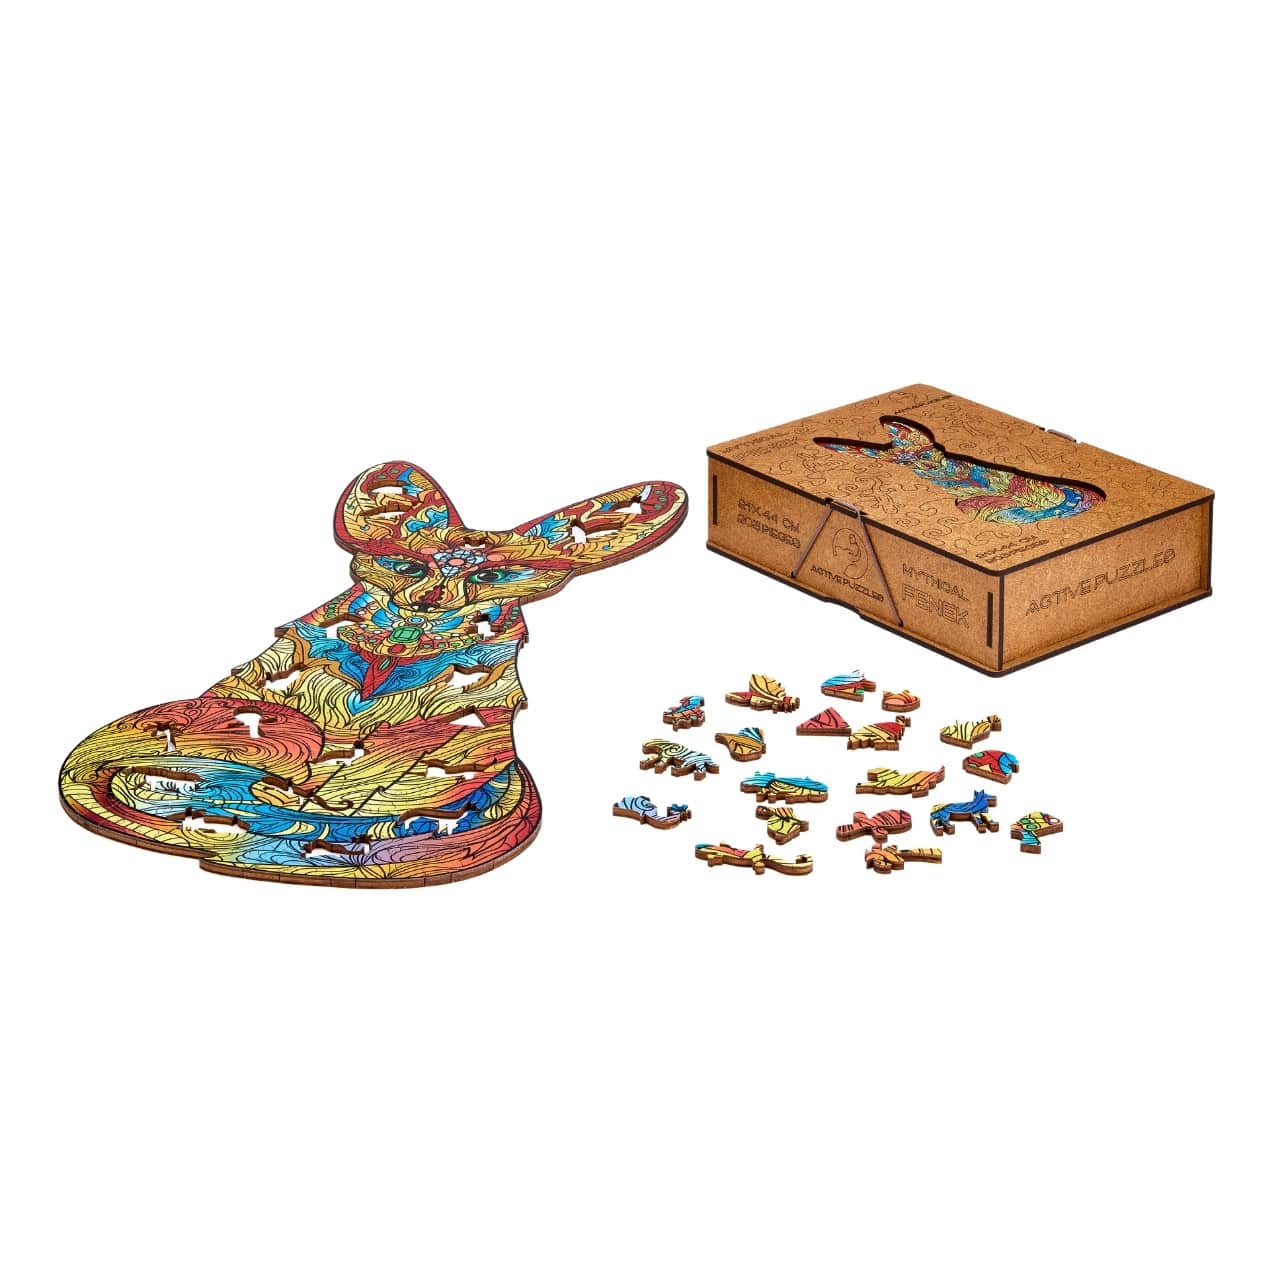 Horizontal Box And Fenek Wooden Puzzles